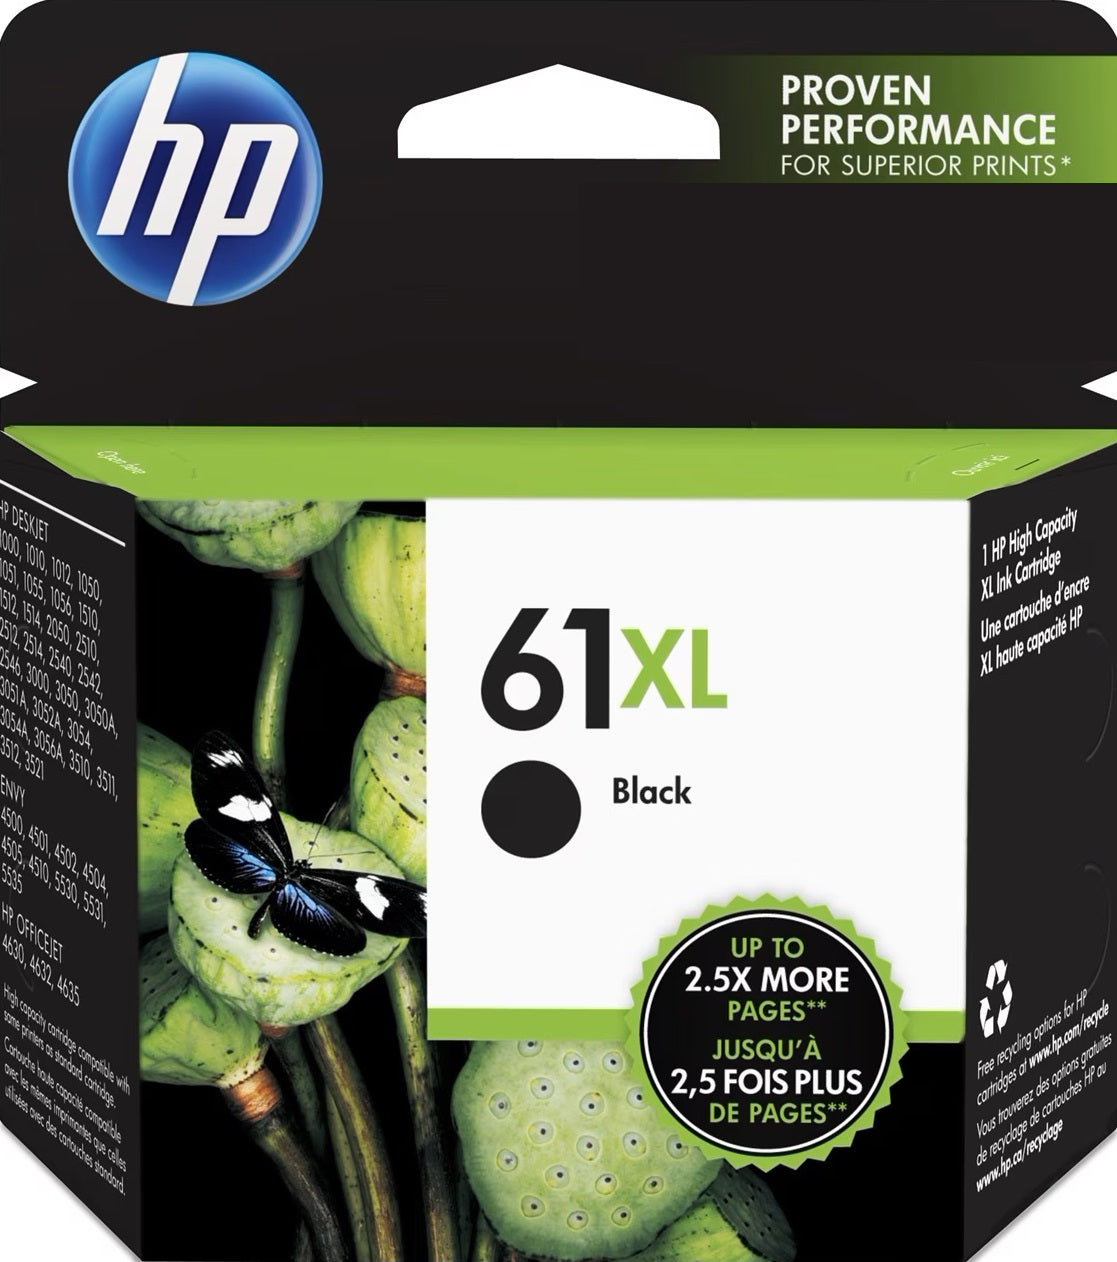 61XL HP High Capacity Black Cartridge